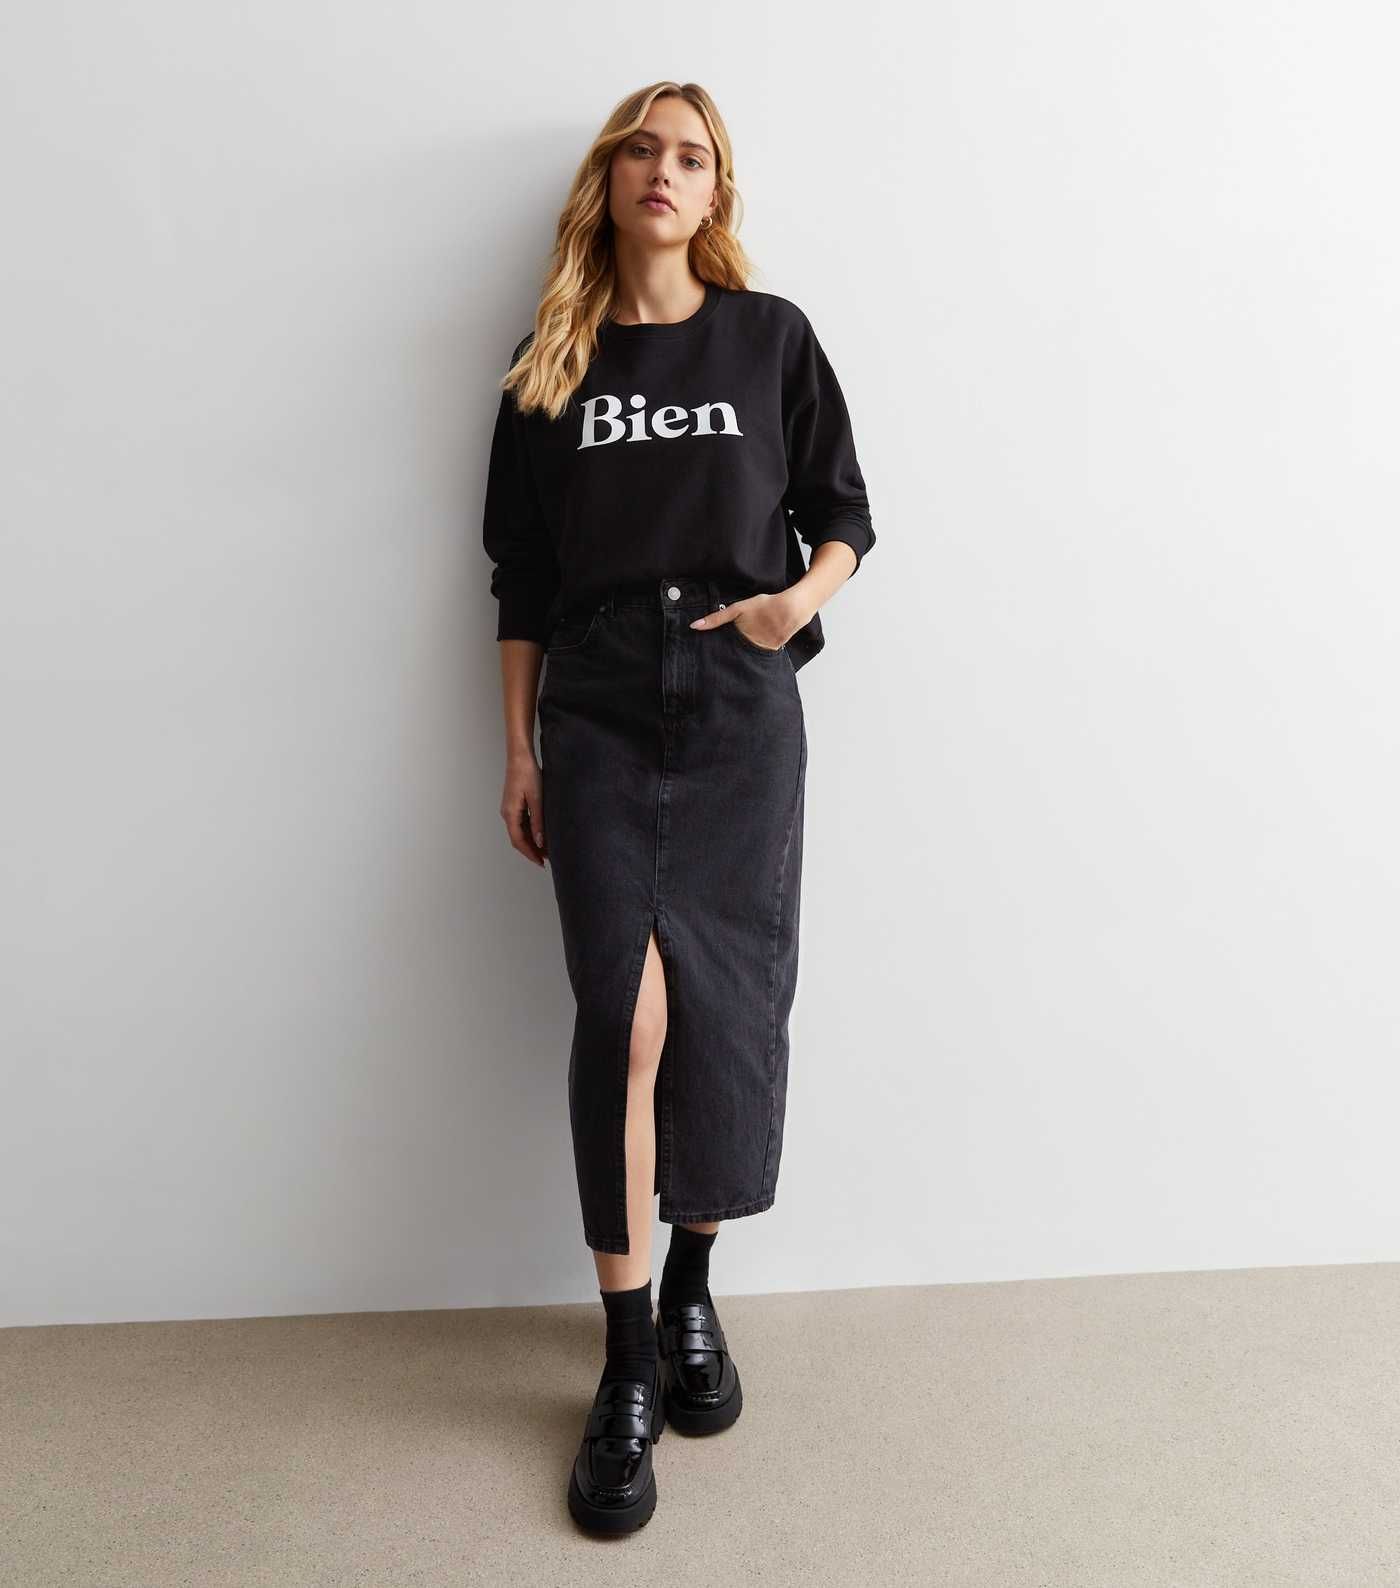 Black Denim Split Hem Maxi Skirt
						
						Add to Saved Items
						Remove from Saved Items | New Look (UK)